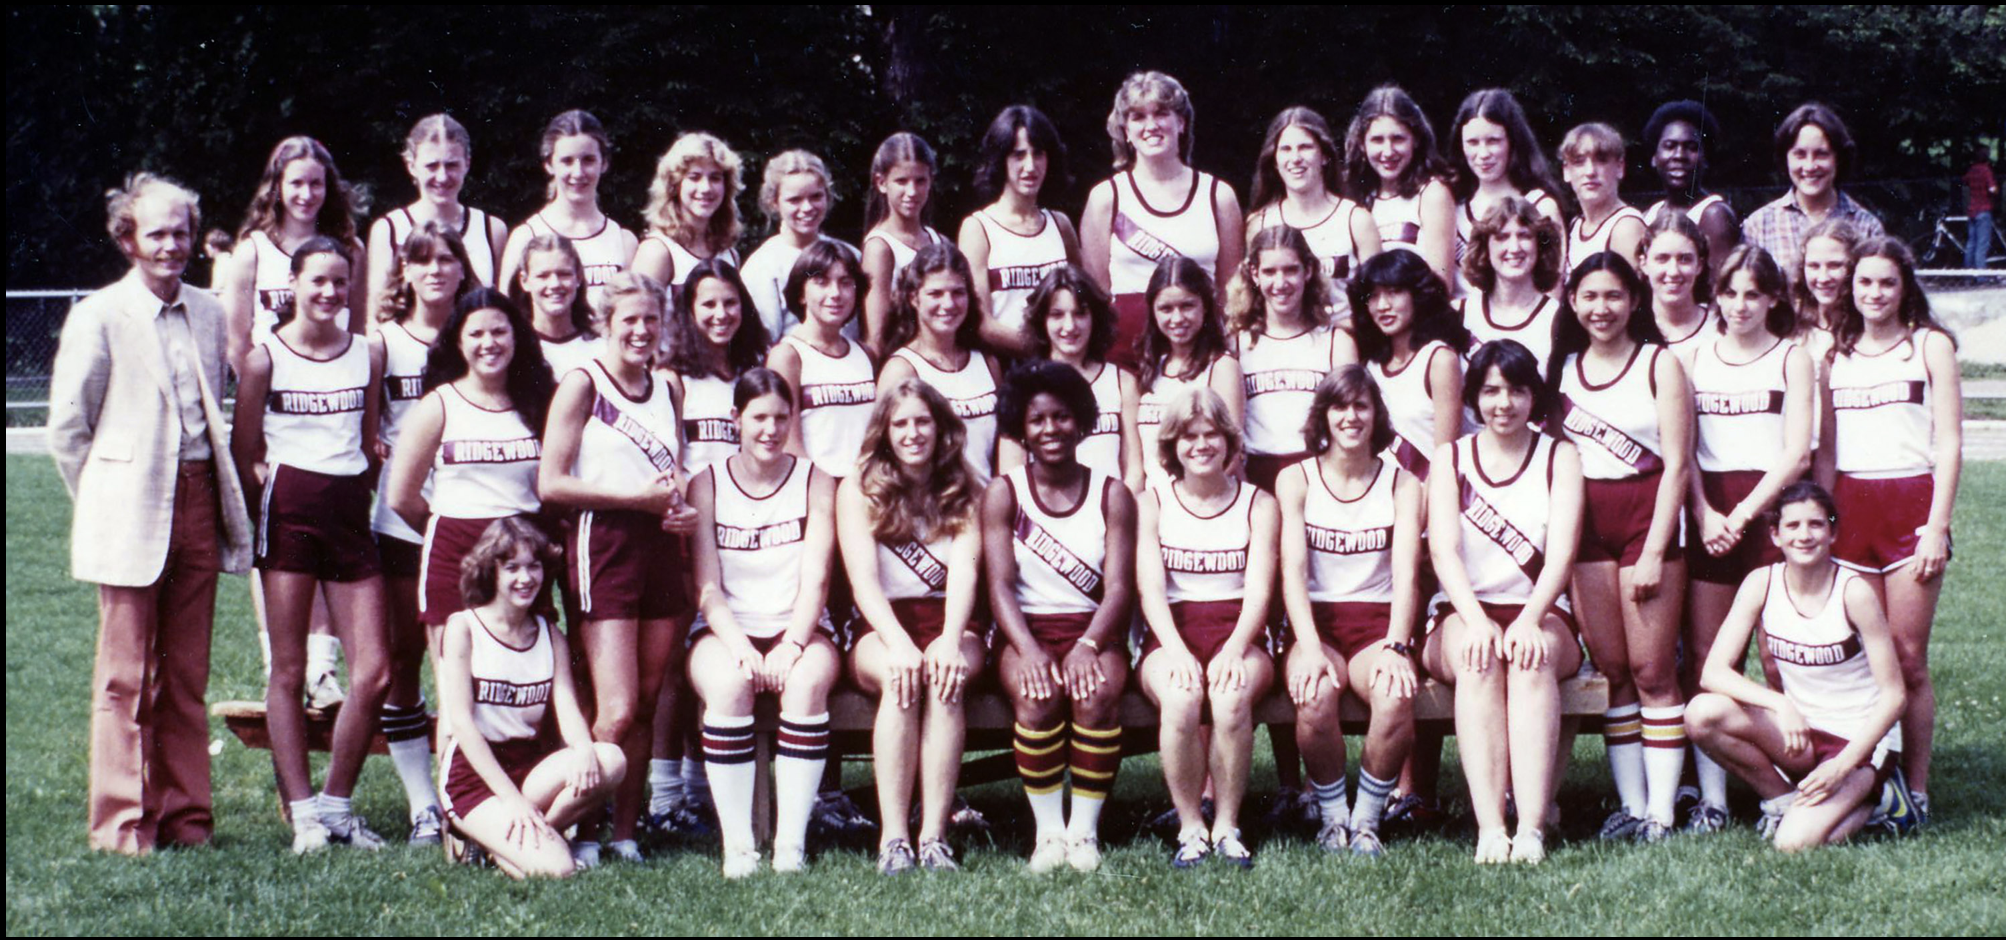 1980 Girls’ Track Team